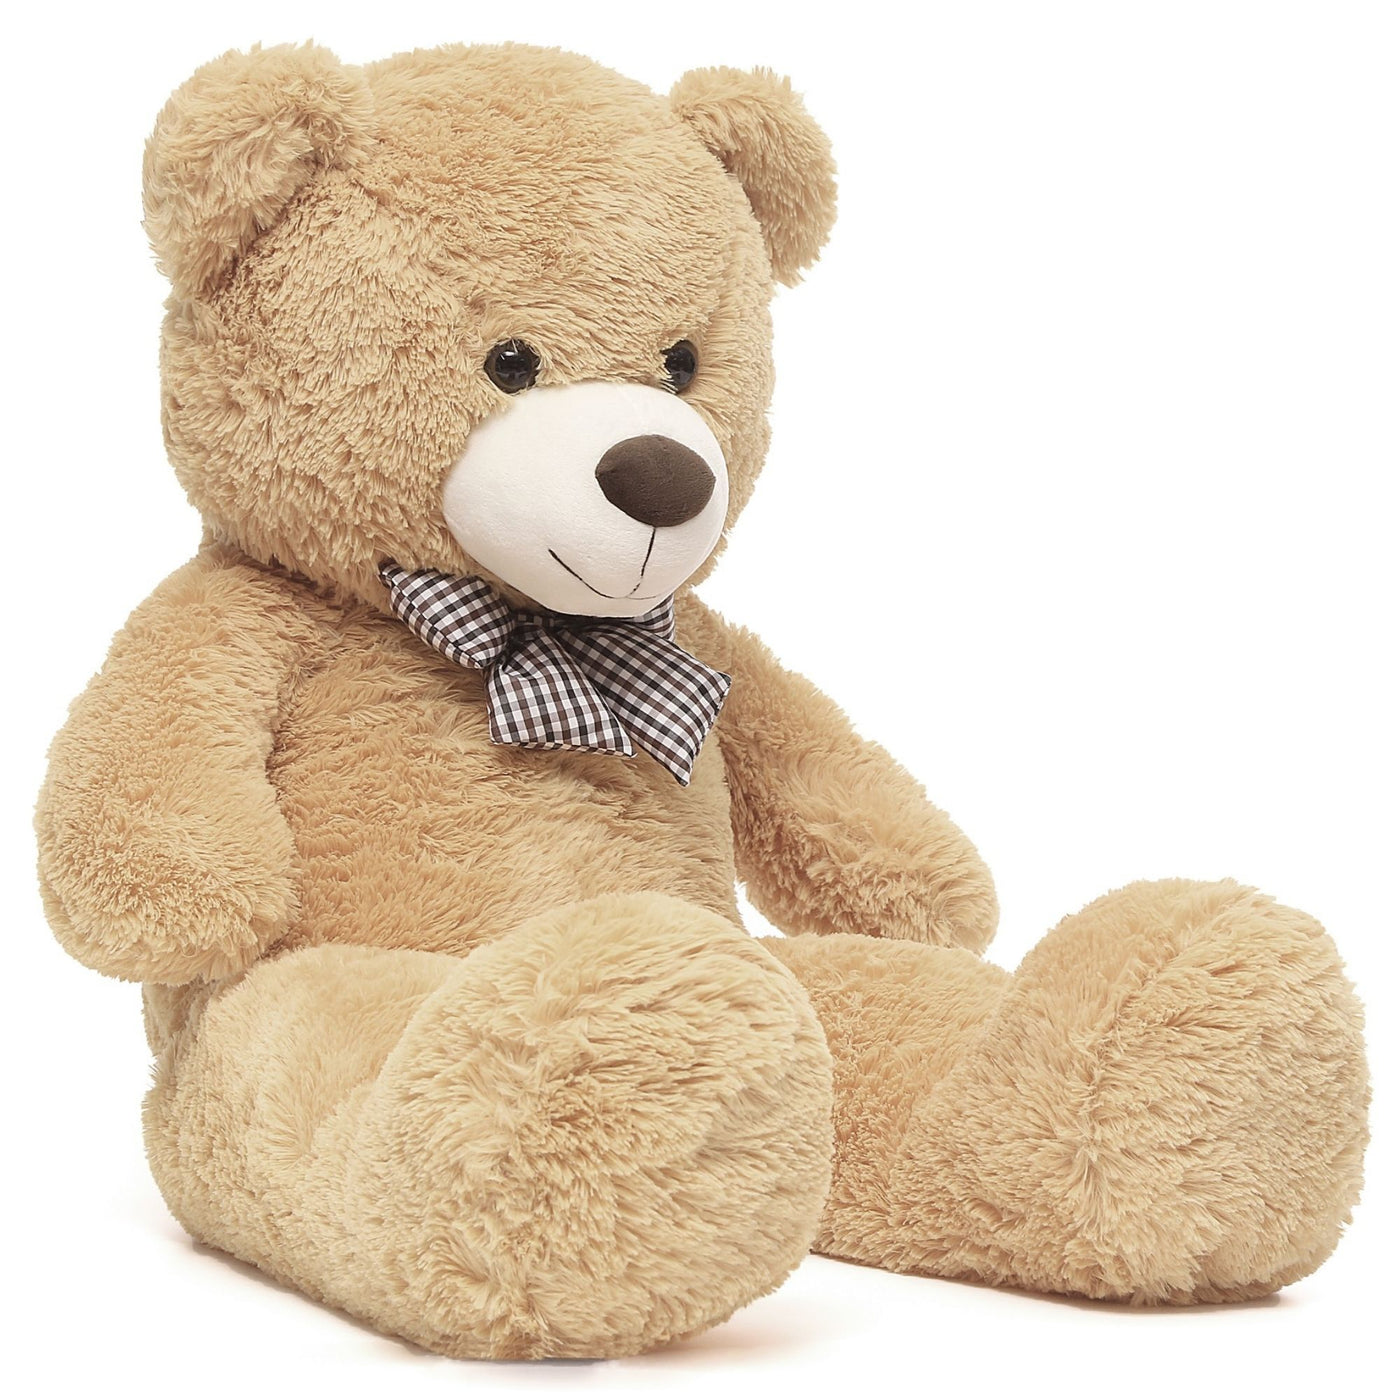 Giant Teddy Bear Stuffed Animal Toy, Light Brown - MorisMos Stuffed Animal Toys